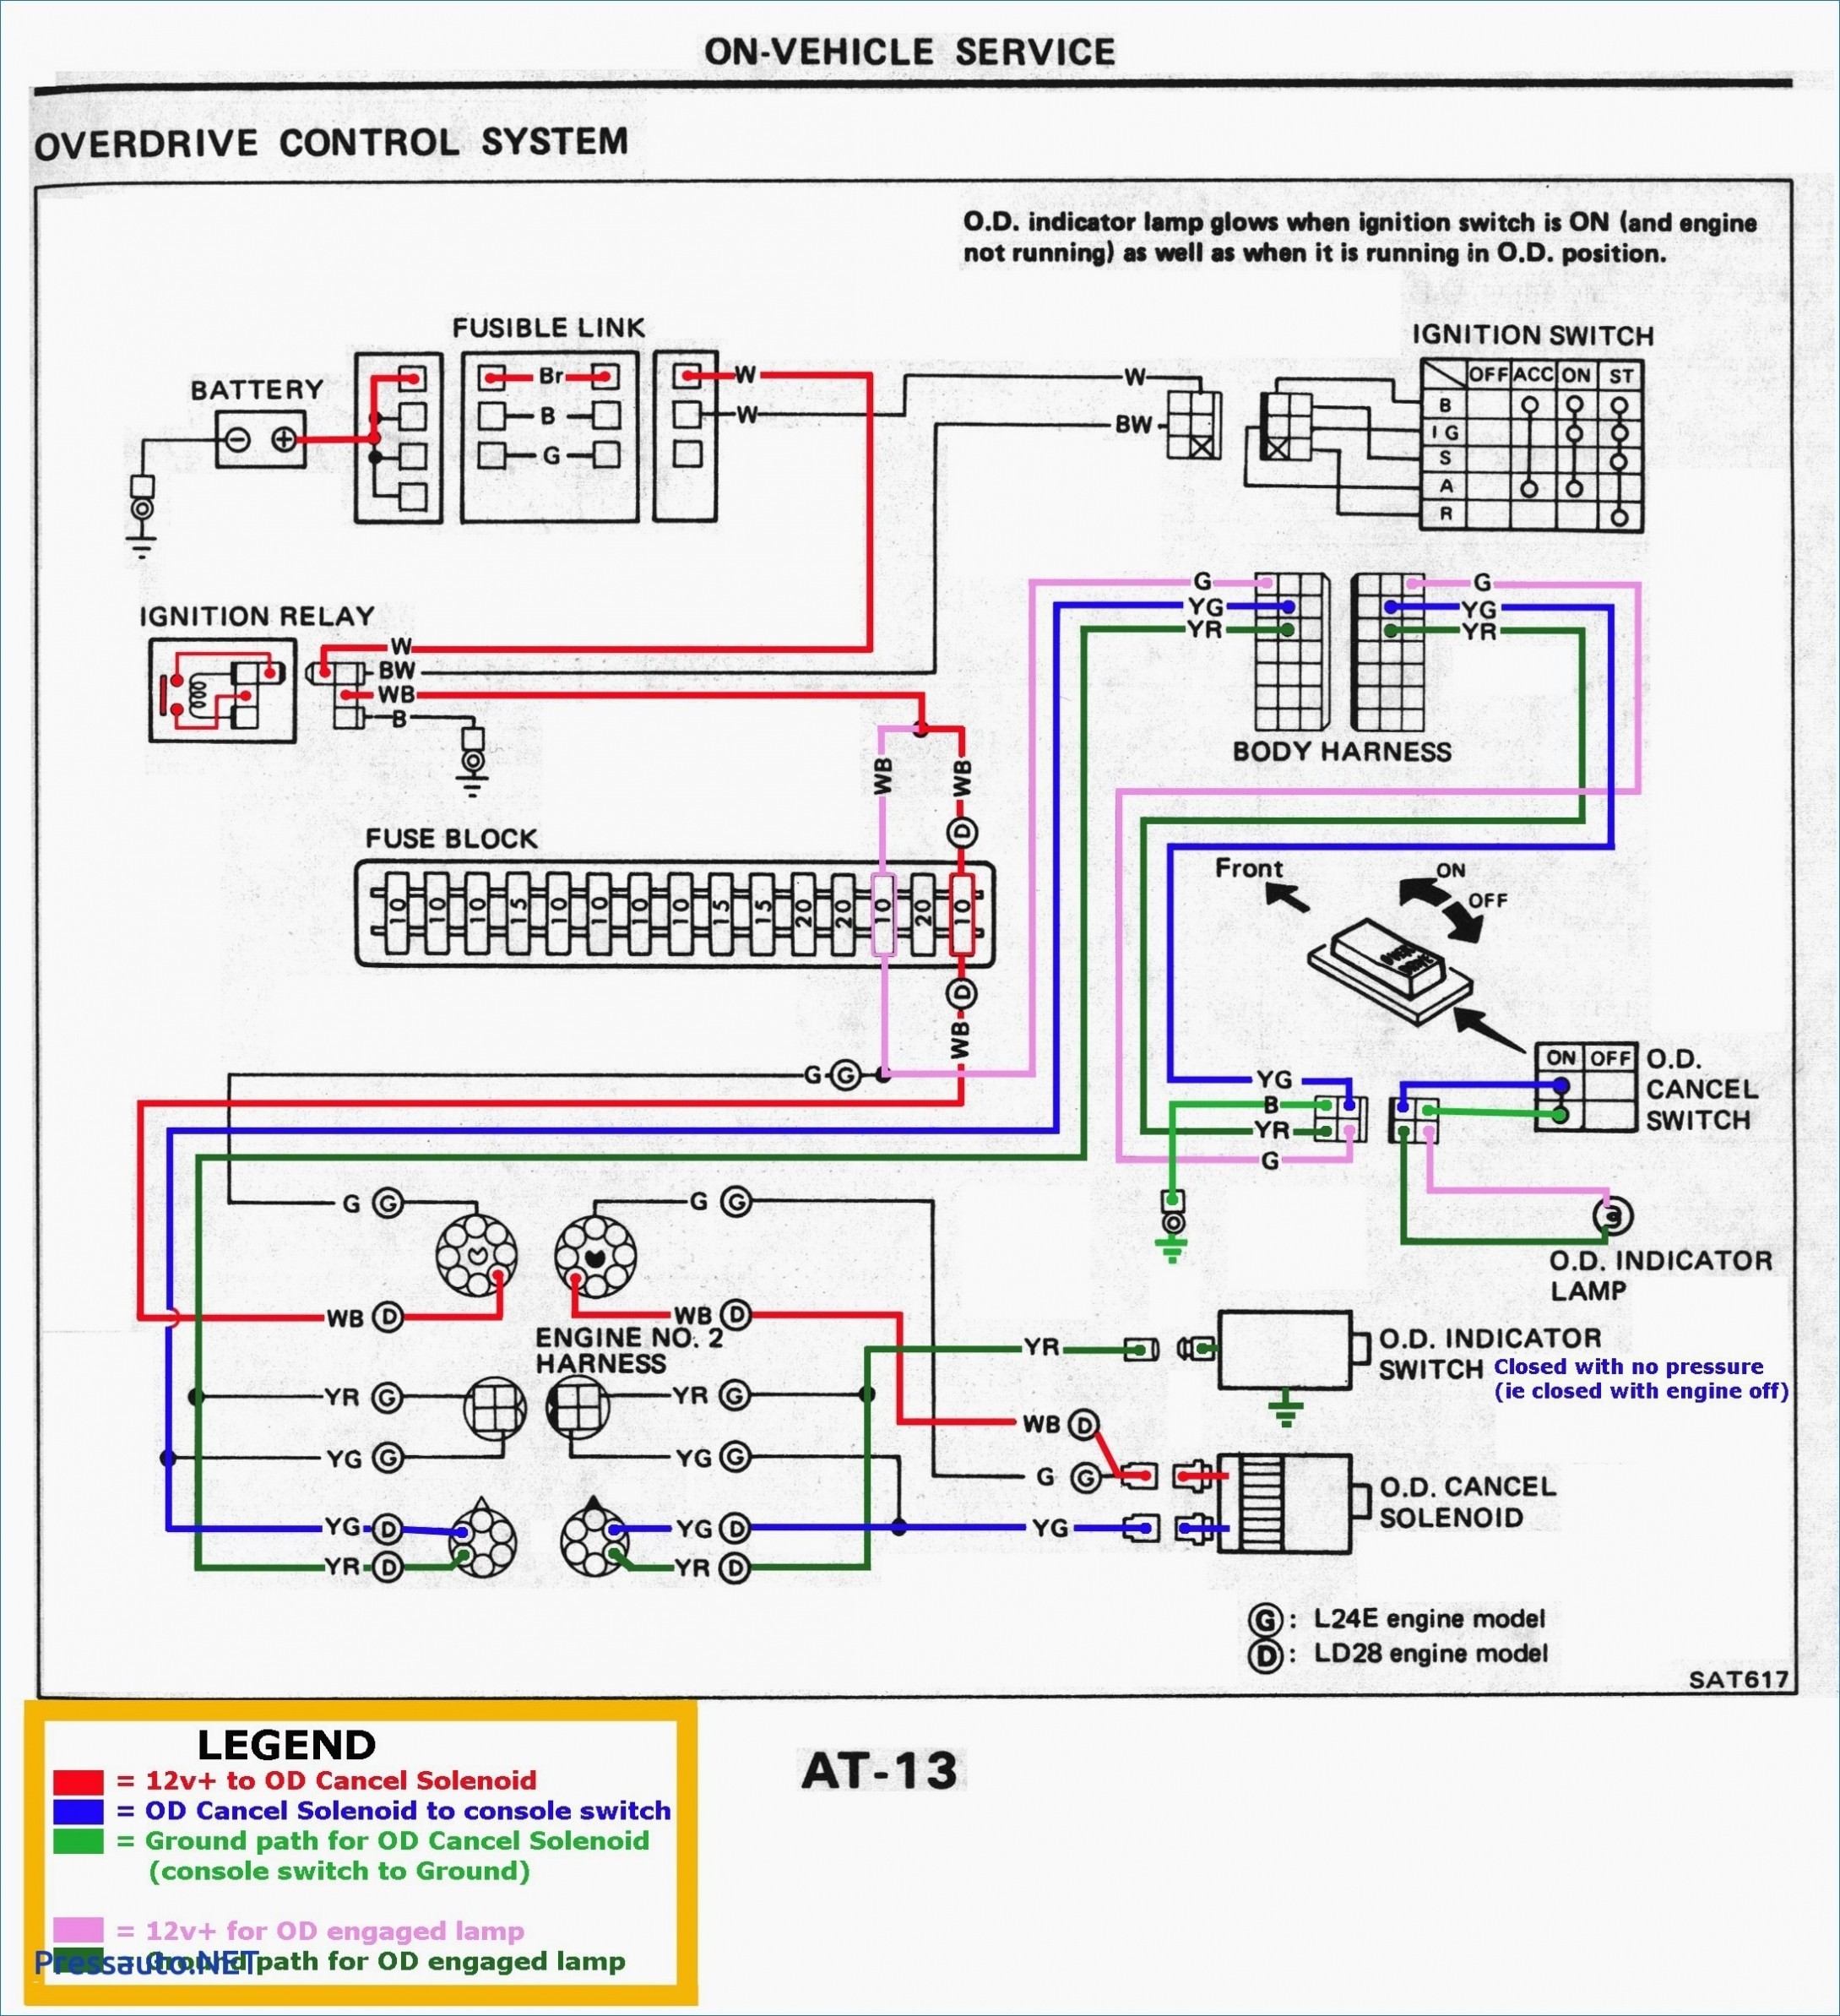 Car Amplifier Wiring Diagram Circuit Diagram Beautiful Circuit Diagram Car Best Car Stereo Wiring Of Car Amplifier Wiring Diagram